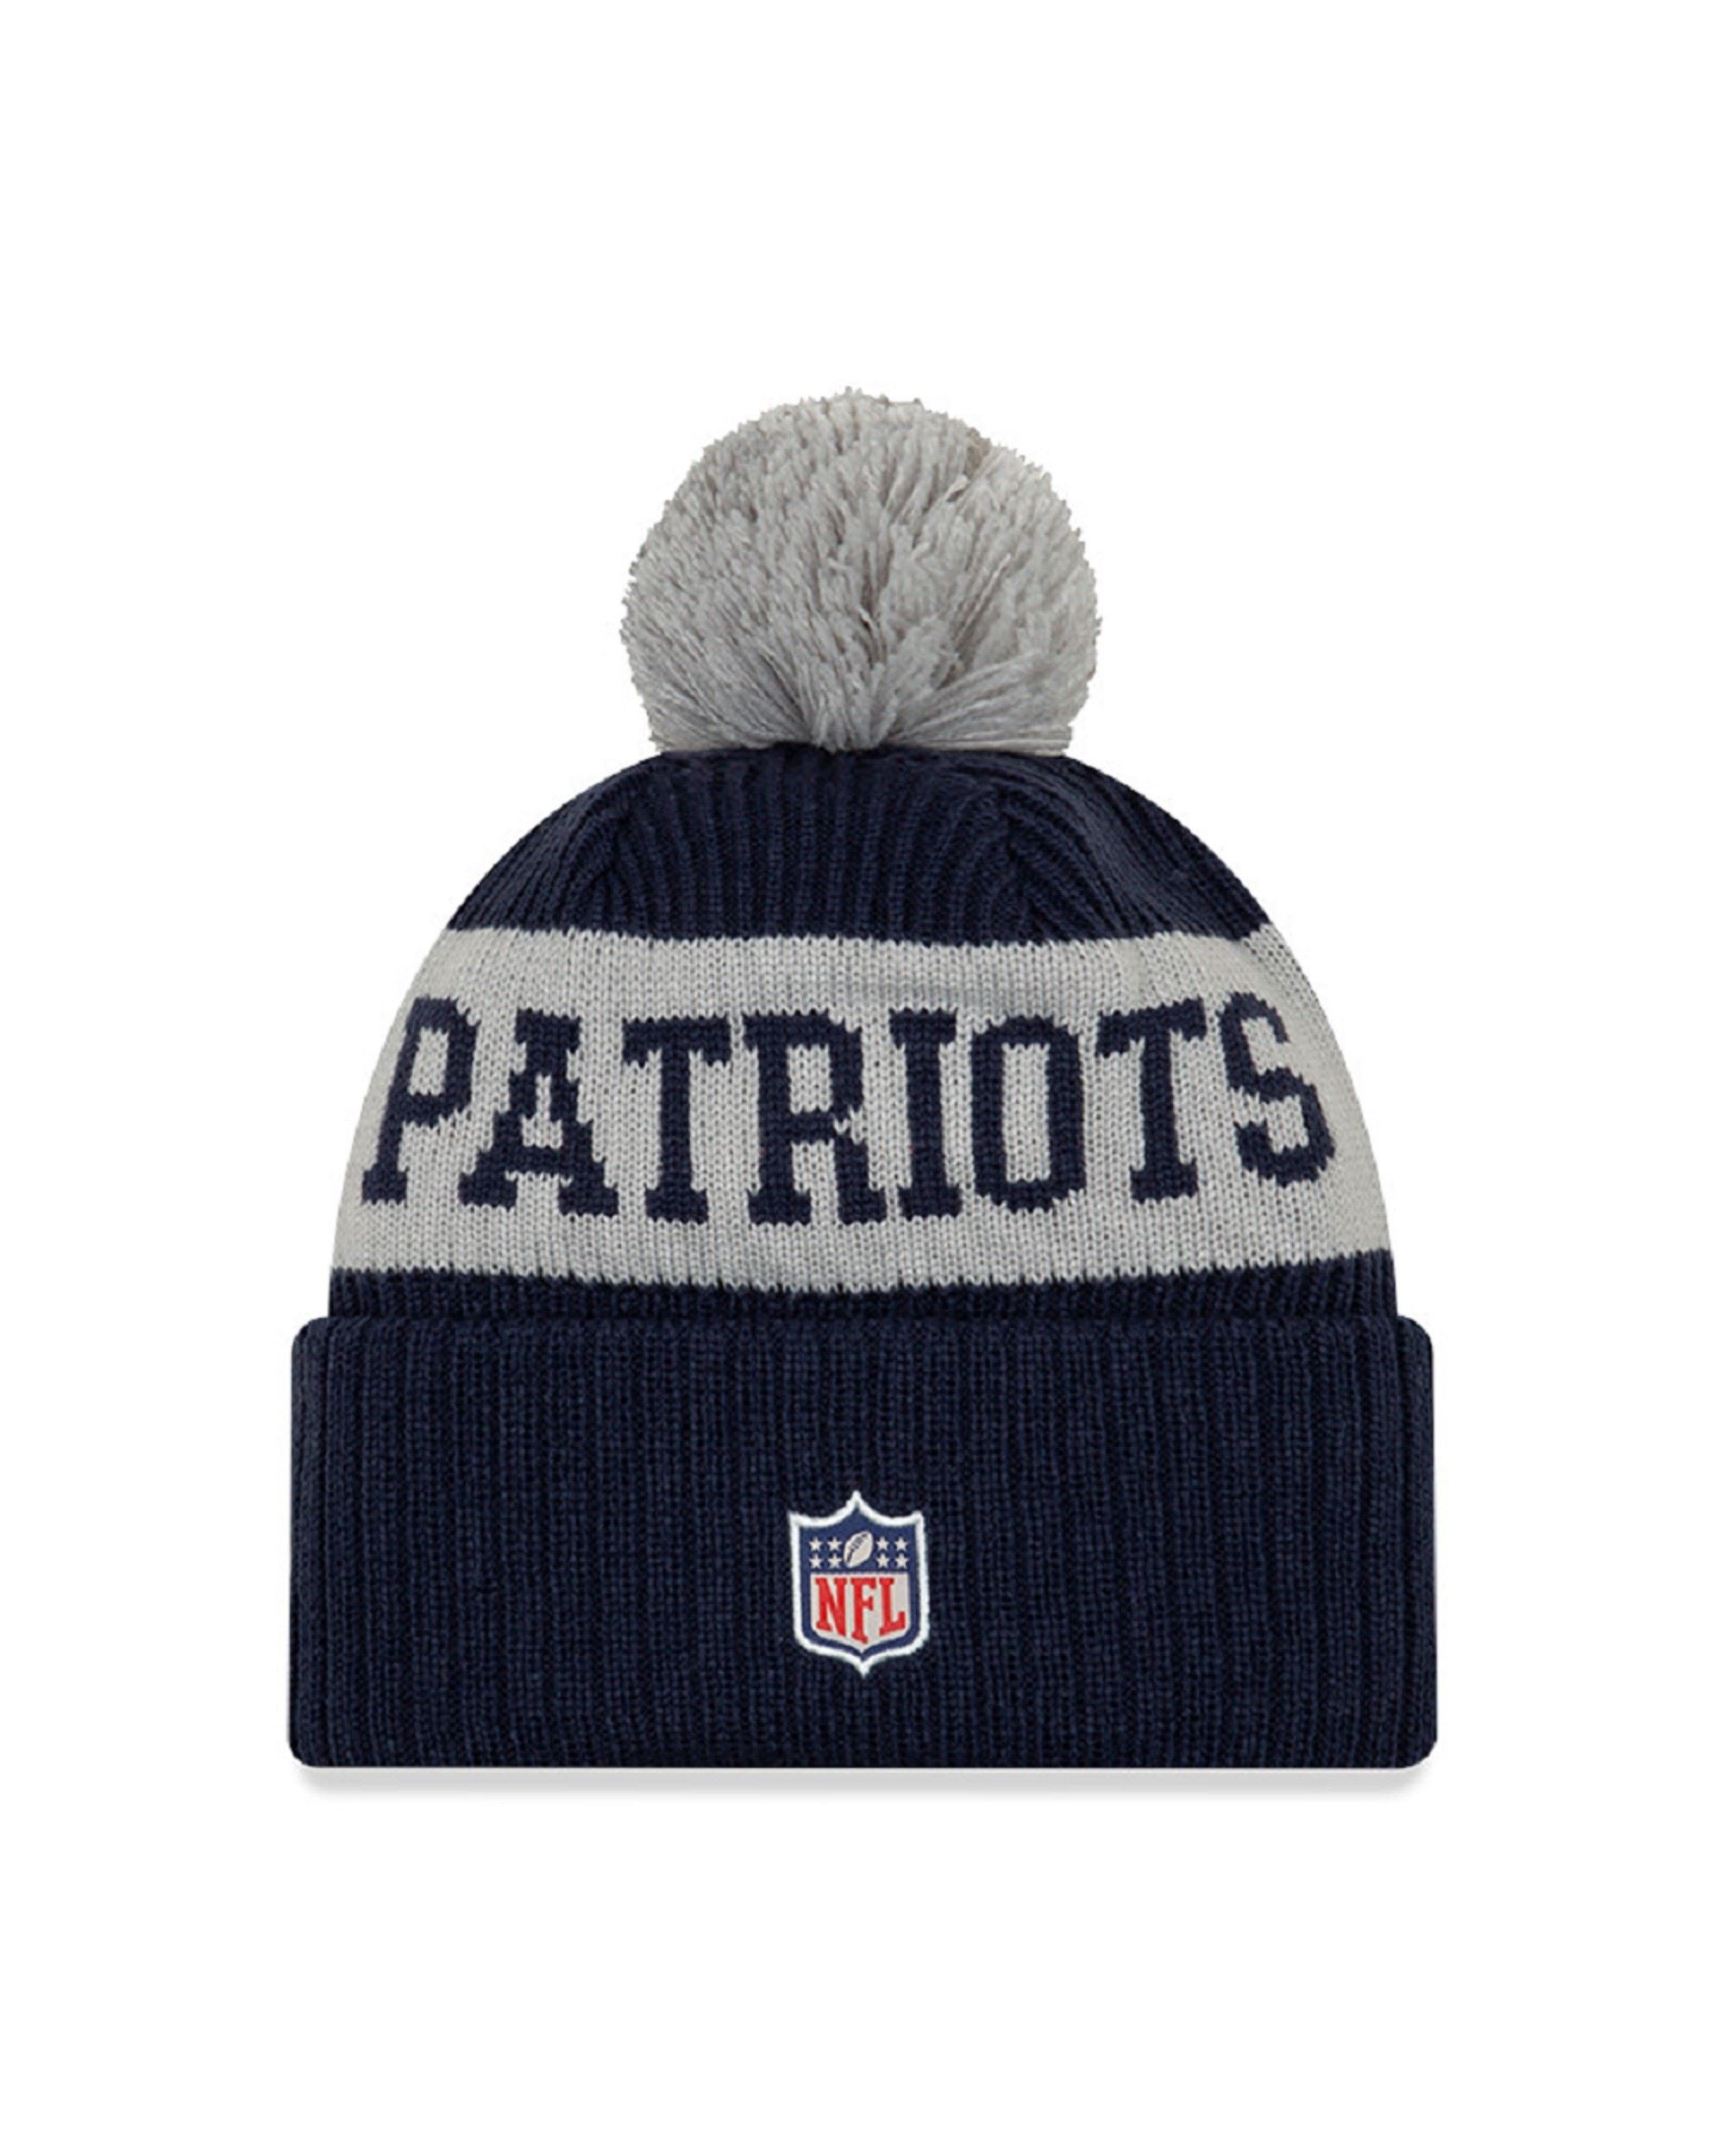 New England Patriots - New Era Beanie - NFL Sideline 2020 On Field Sport Knit - Navy